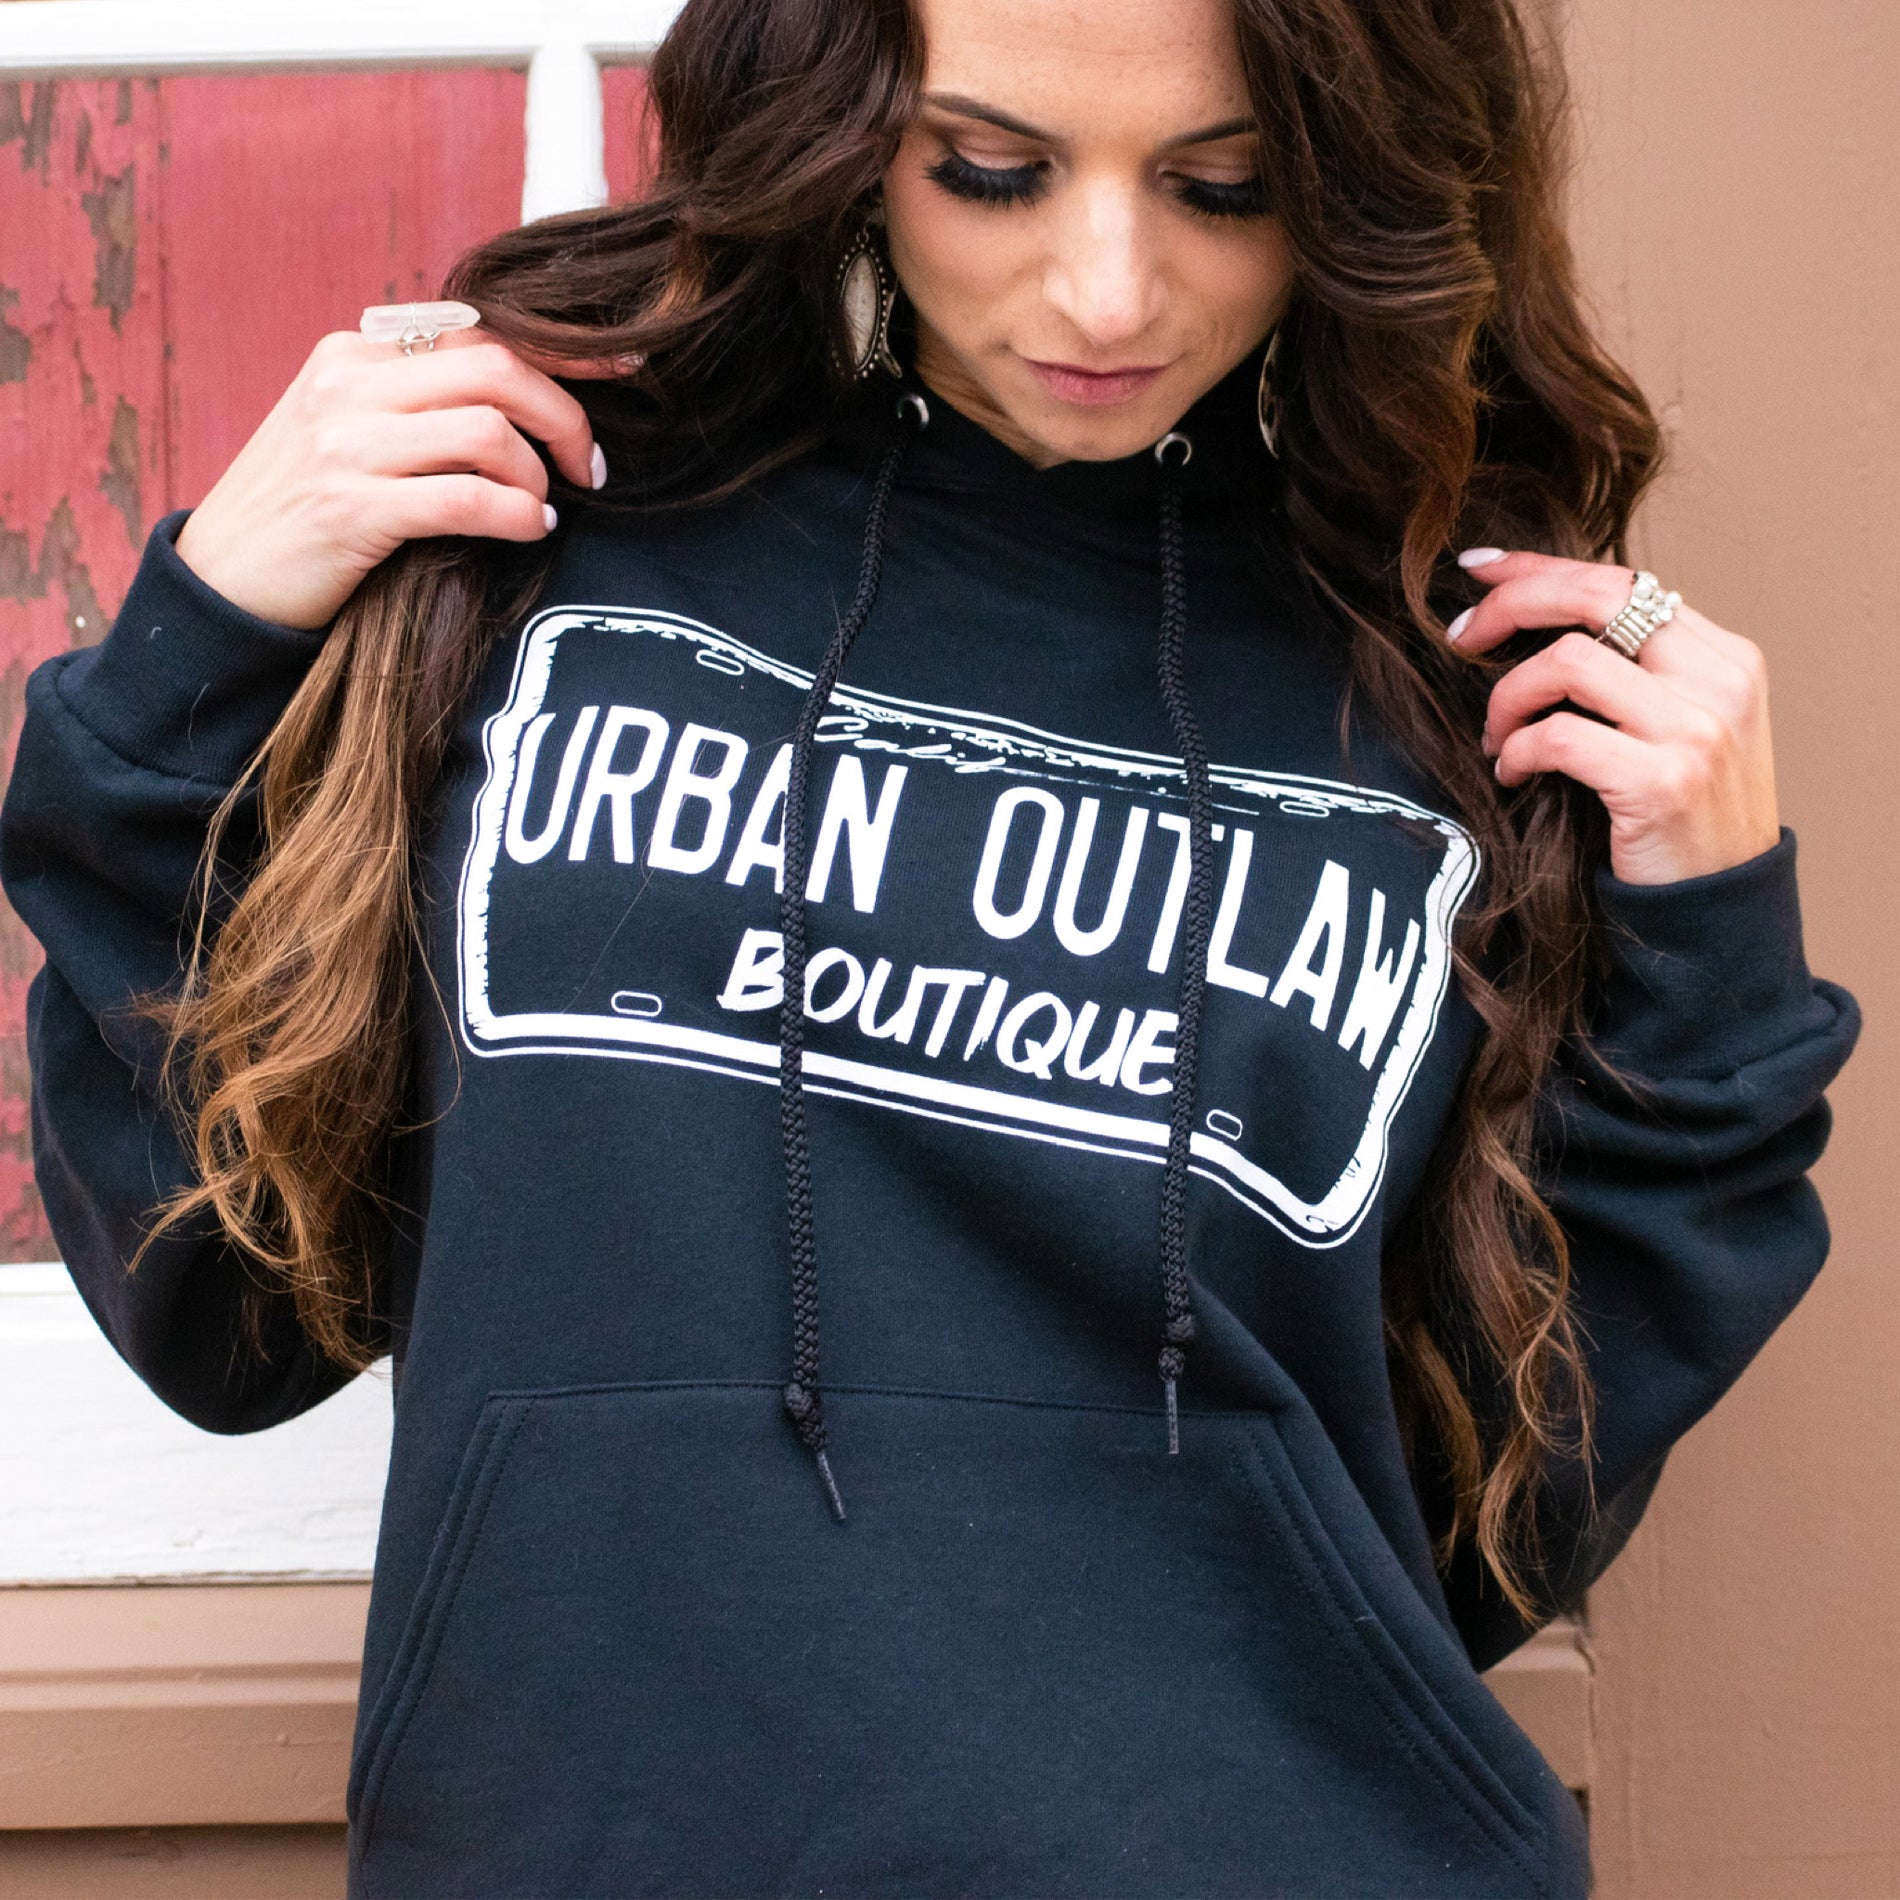 Urban Outlaw Hoody | Urban Outlaw Boutique